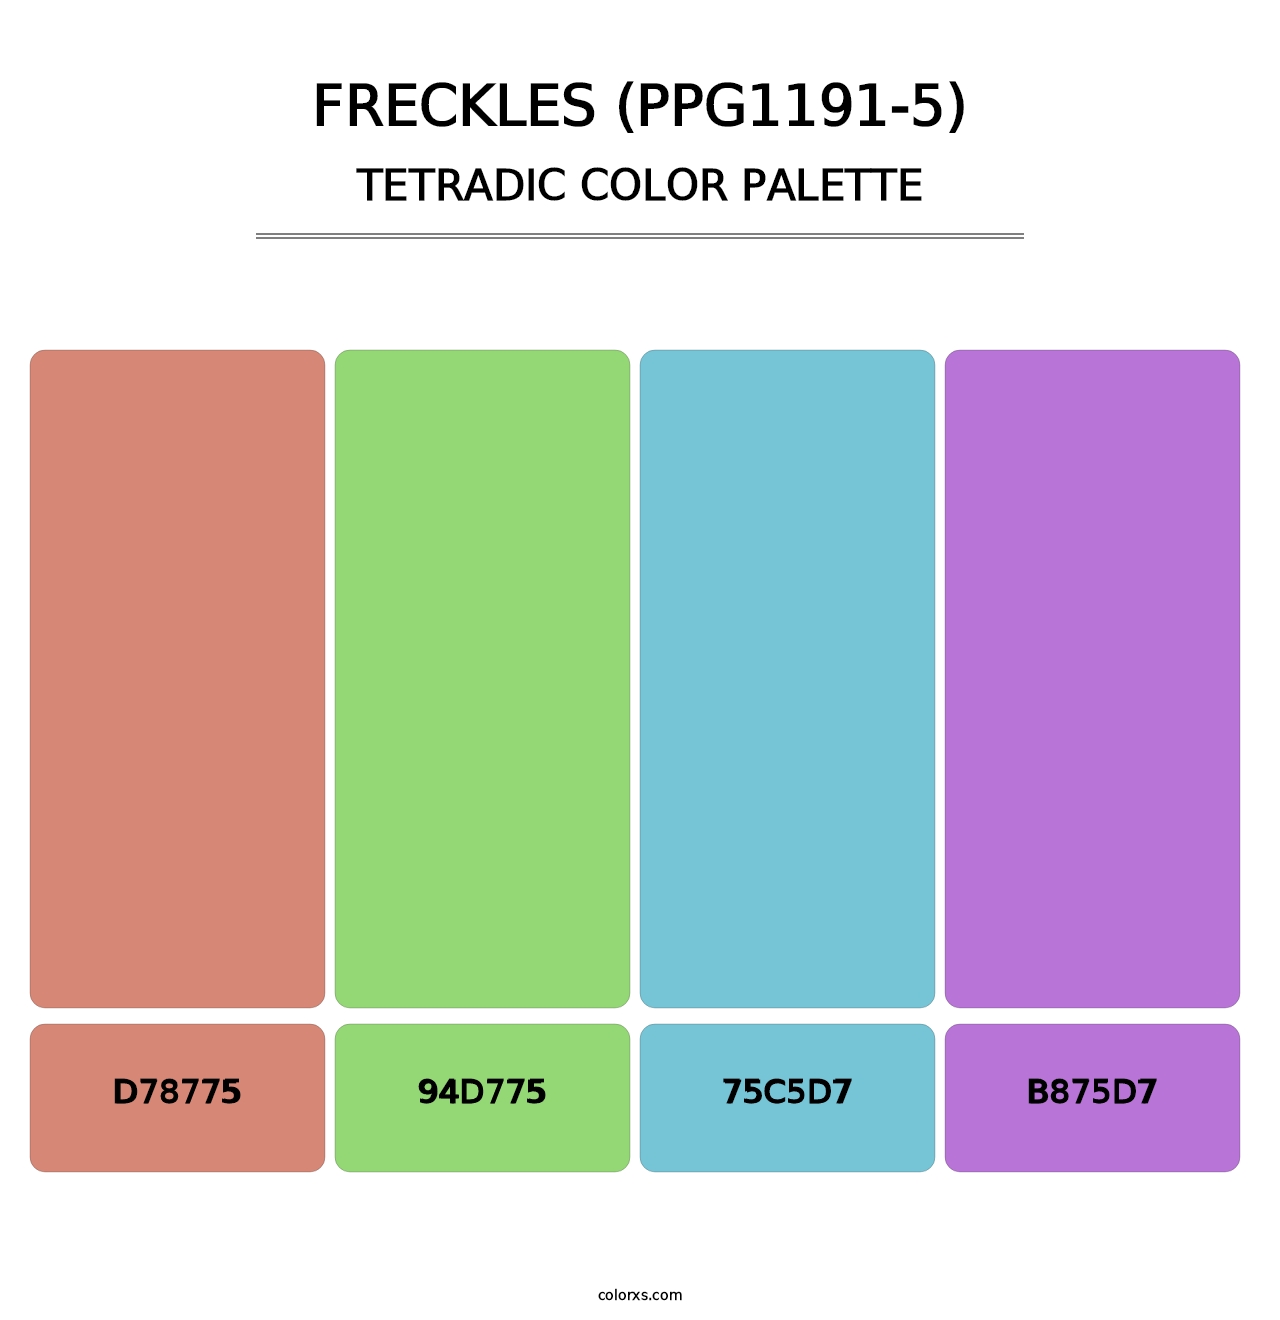 Freckles (PPG1191-5) - Tetradic Color Palette